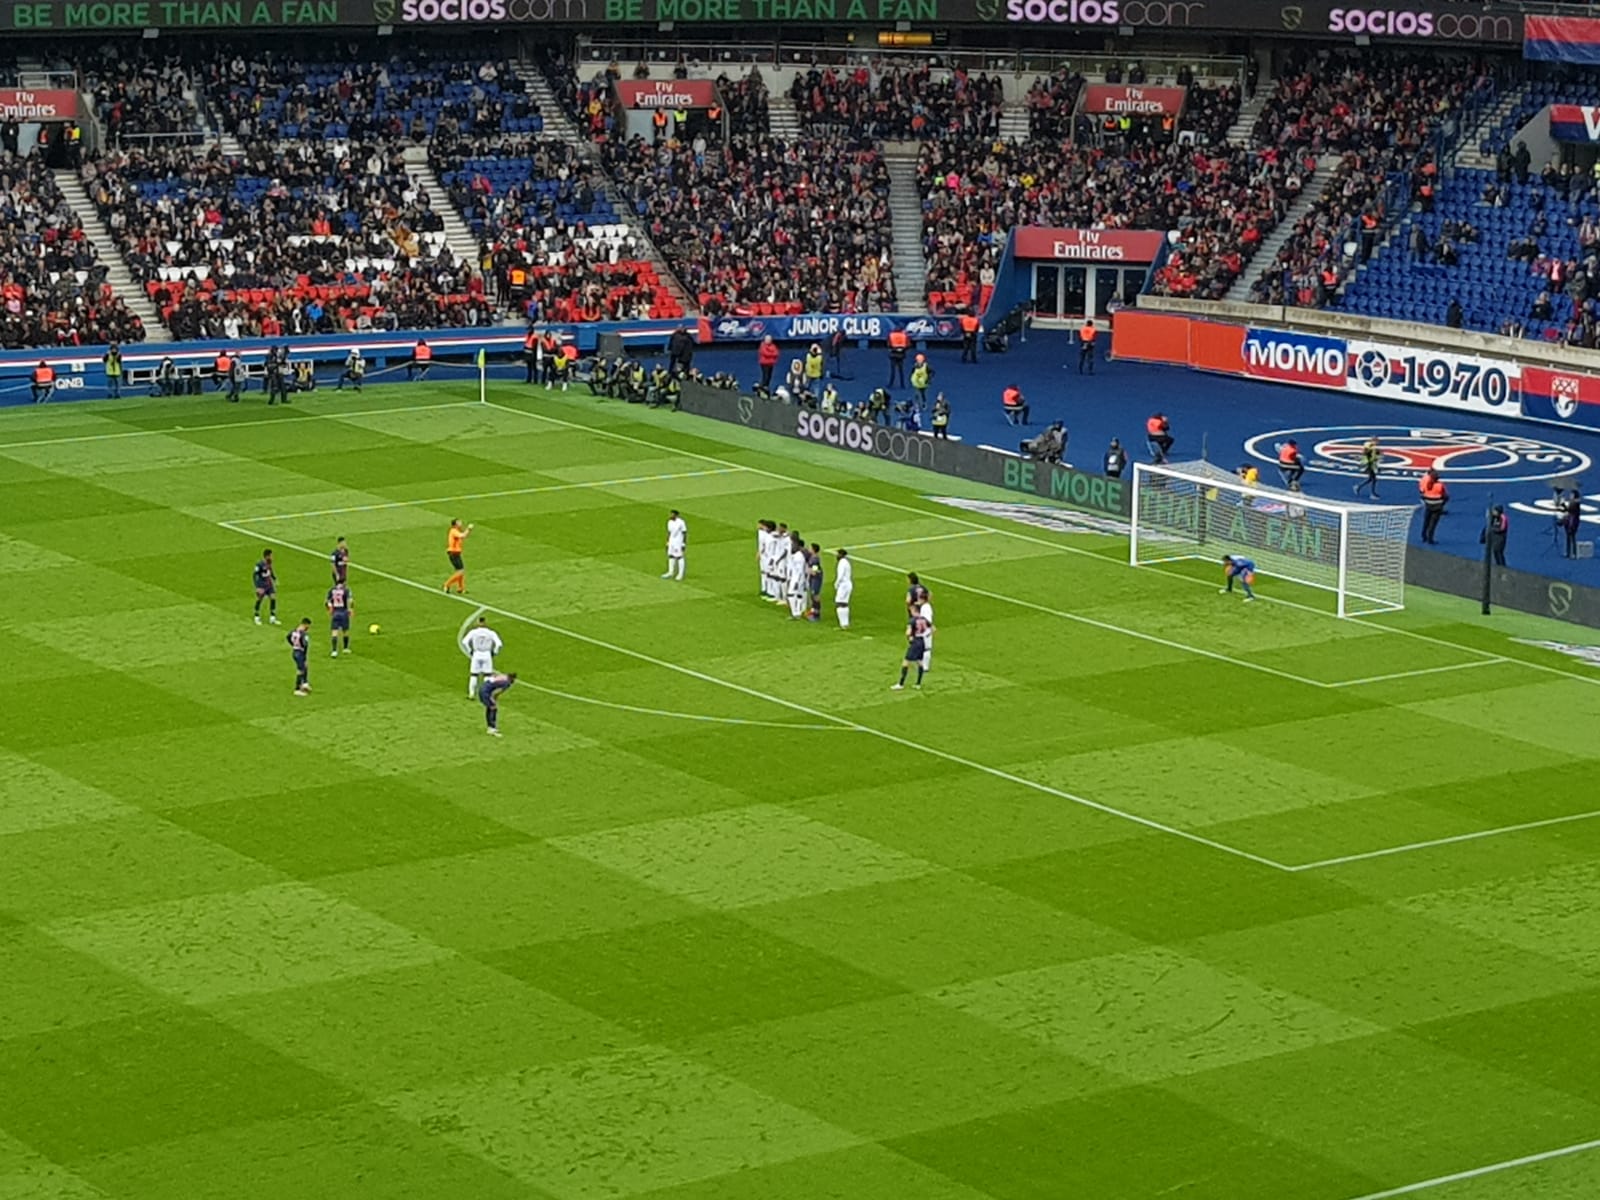 Pengalaman Nonton Match PSG di Paris